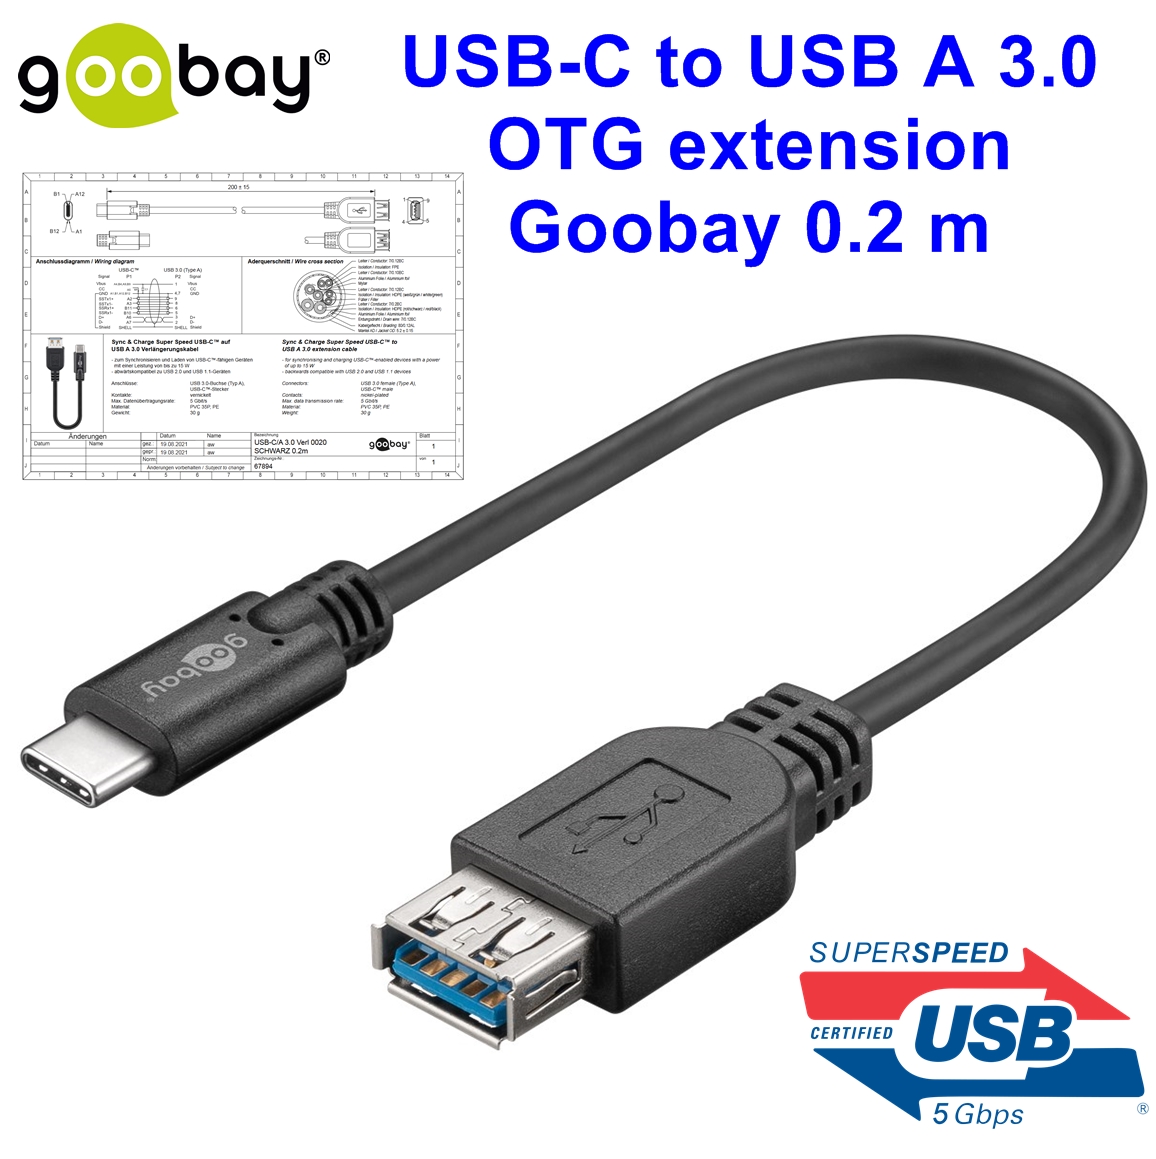 USB-C to USB A 3.0 OTG extension Goobay 0.2 m